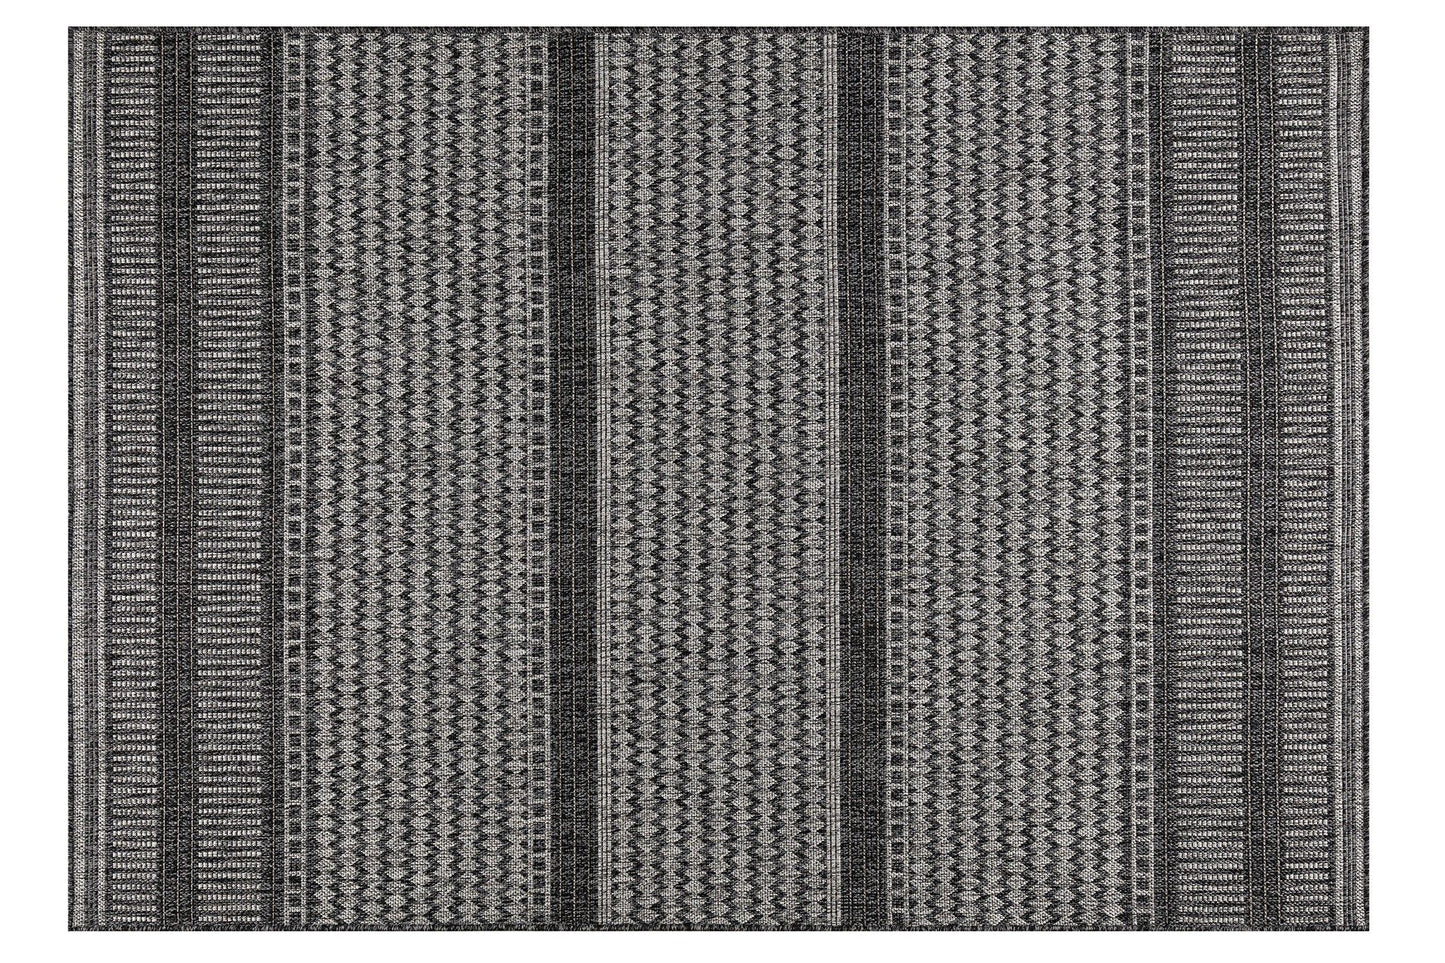 08719A - Sort, antracit - Tæppe (120 x 180)